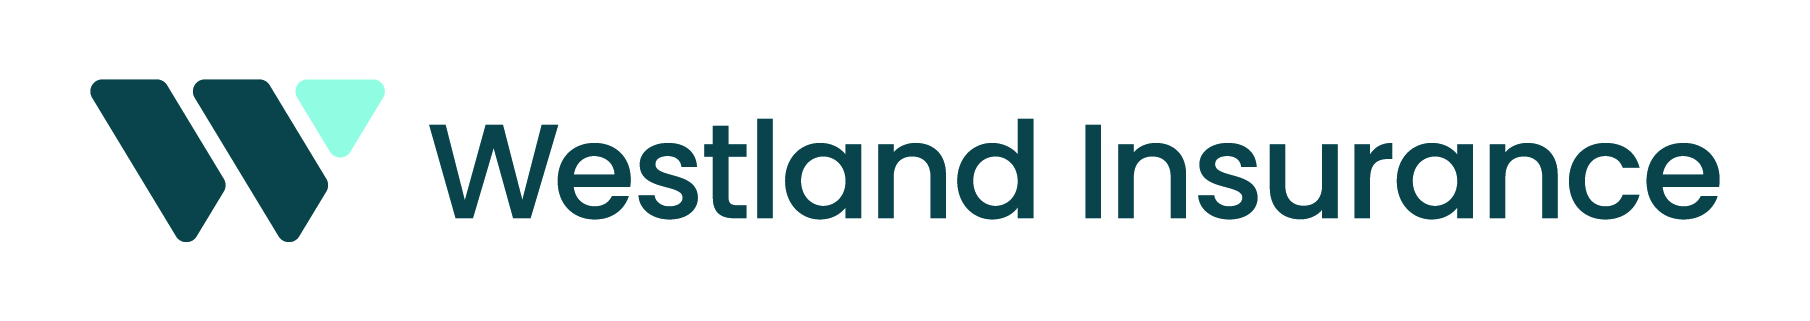 Westland Insurance launches digital platform Westland Express thumbnail